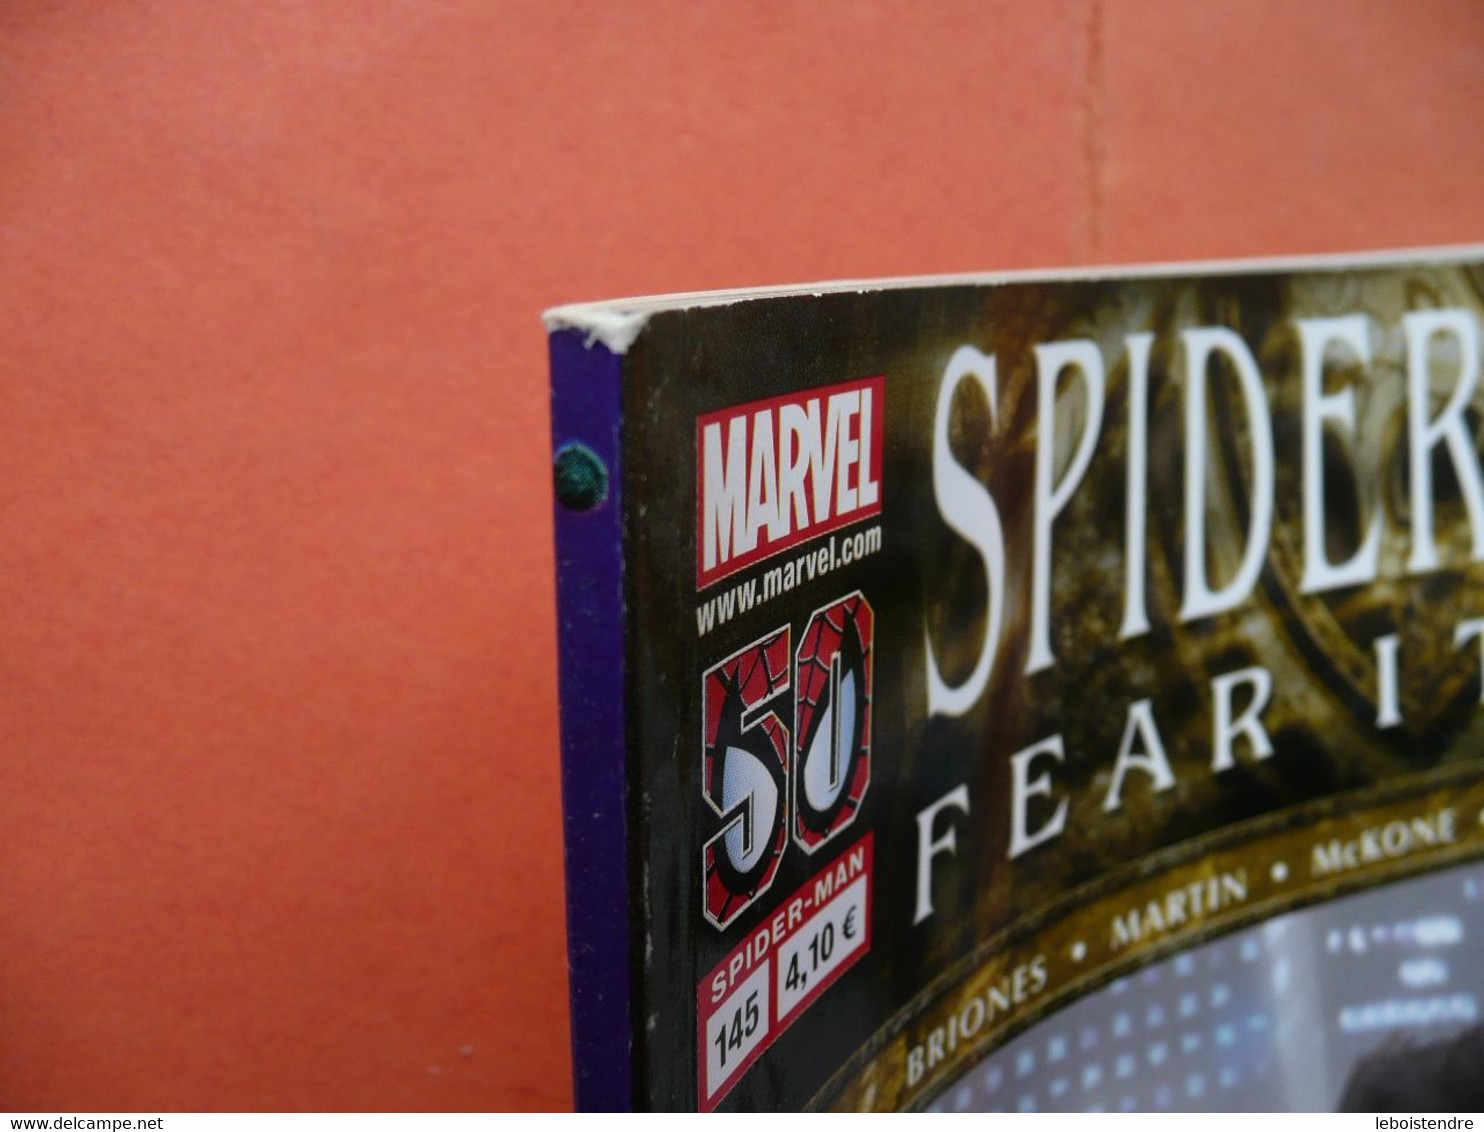 SPIDERMAN V2 SPIDER-MAN N 145 FEVRIER 2012 FEAR ITSELF PANINI COMICS MARVEL - Spiderman